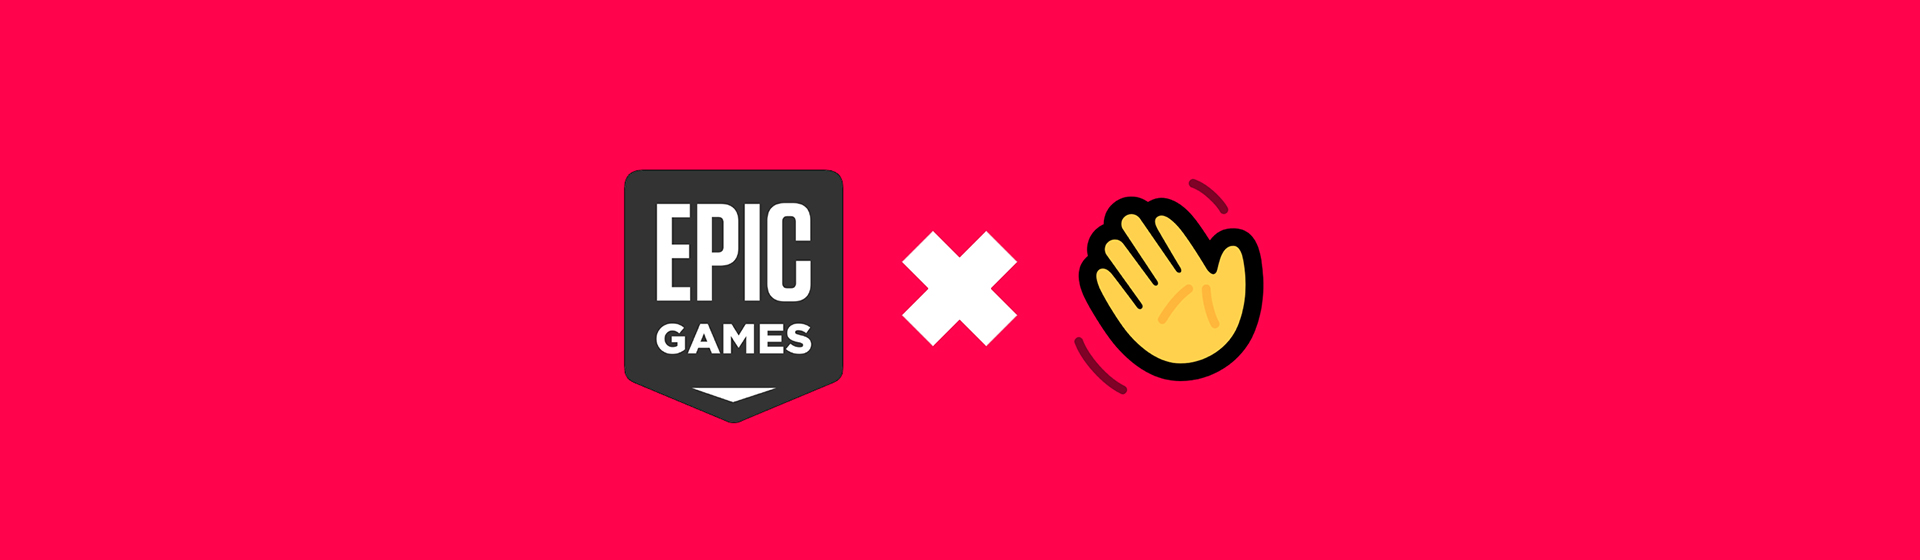 Epic Games X Houseparty